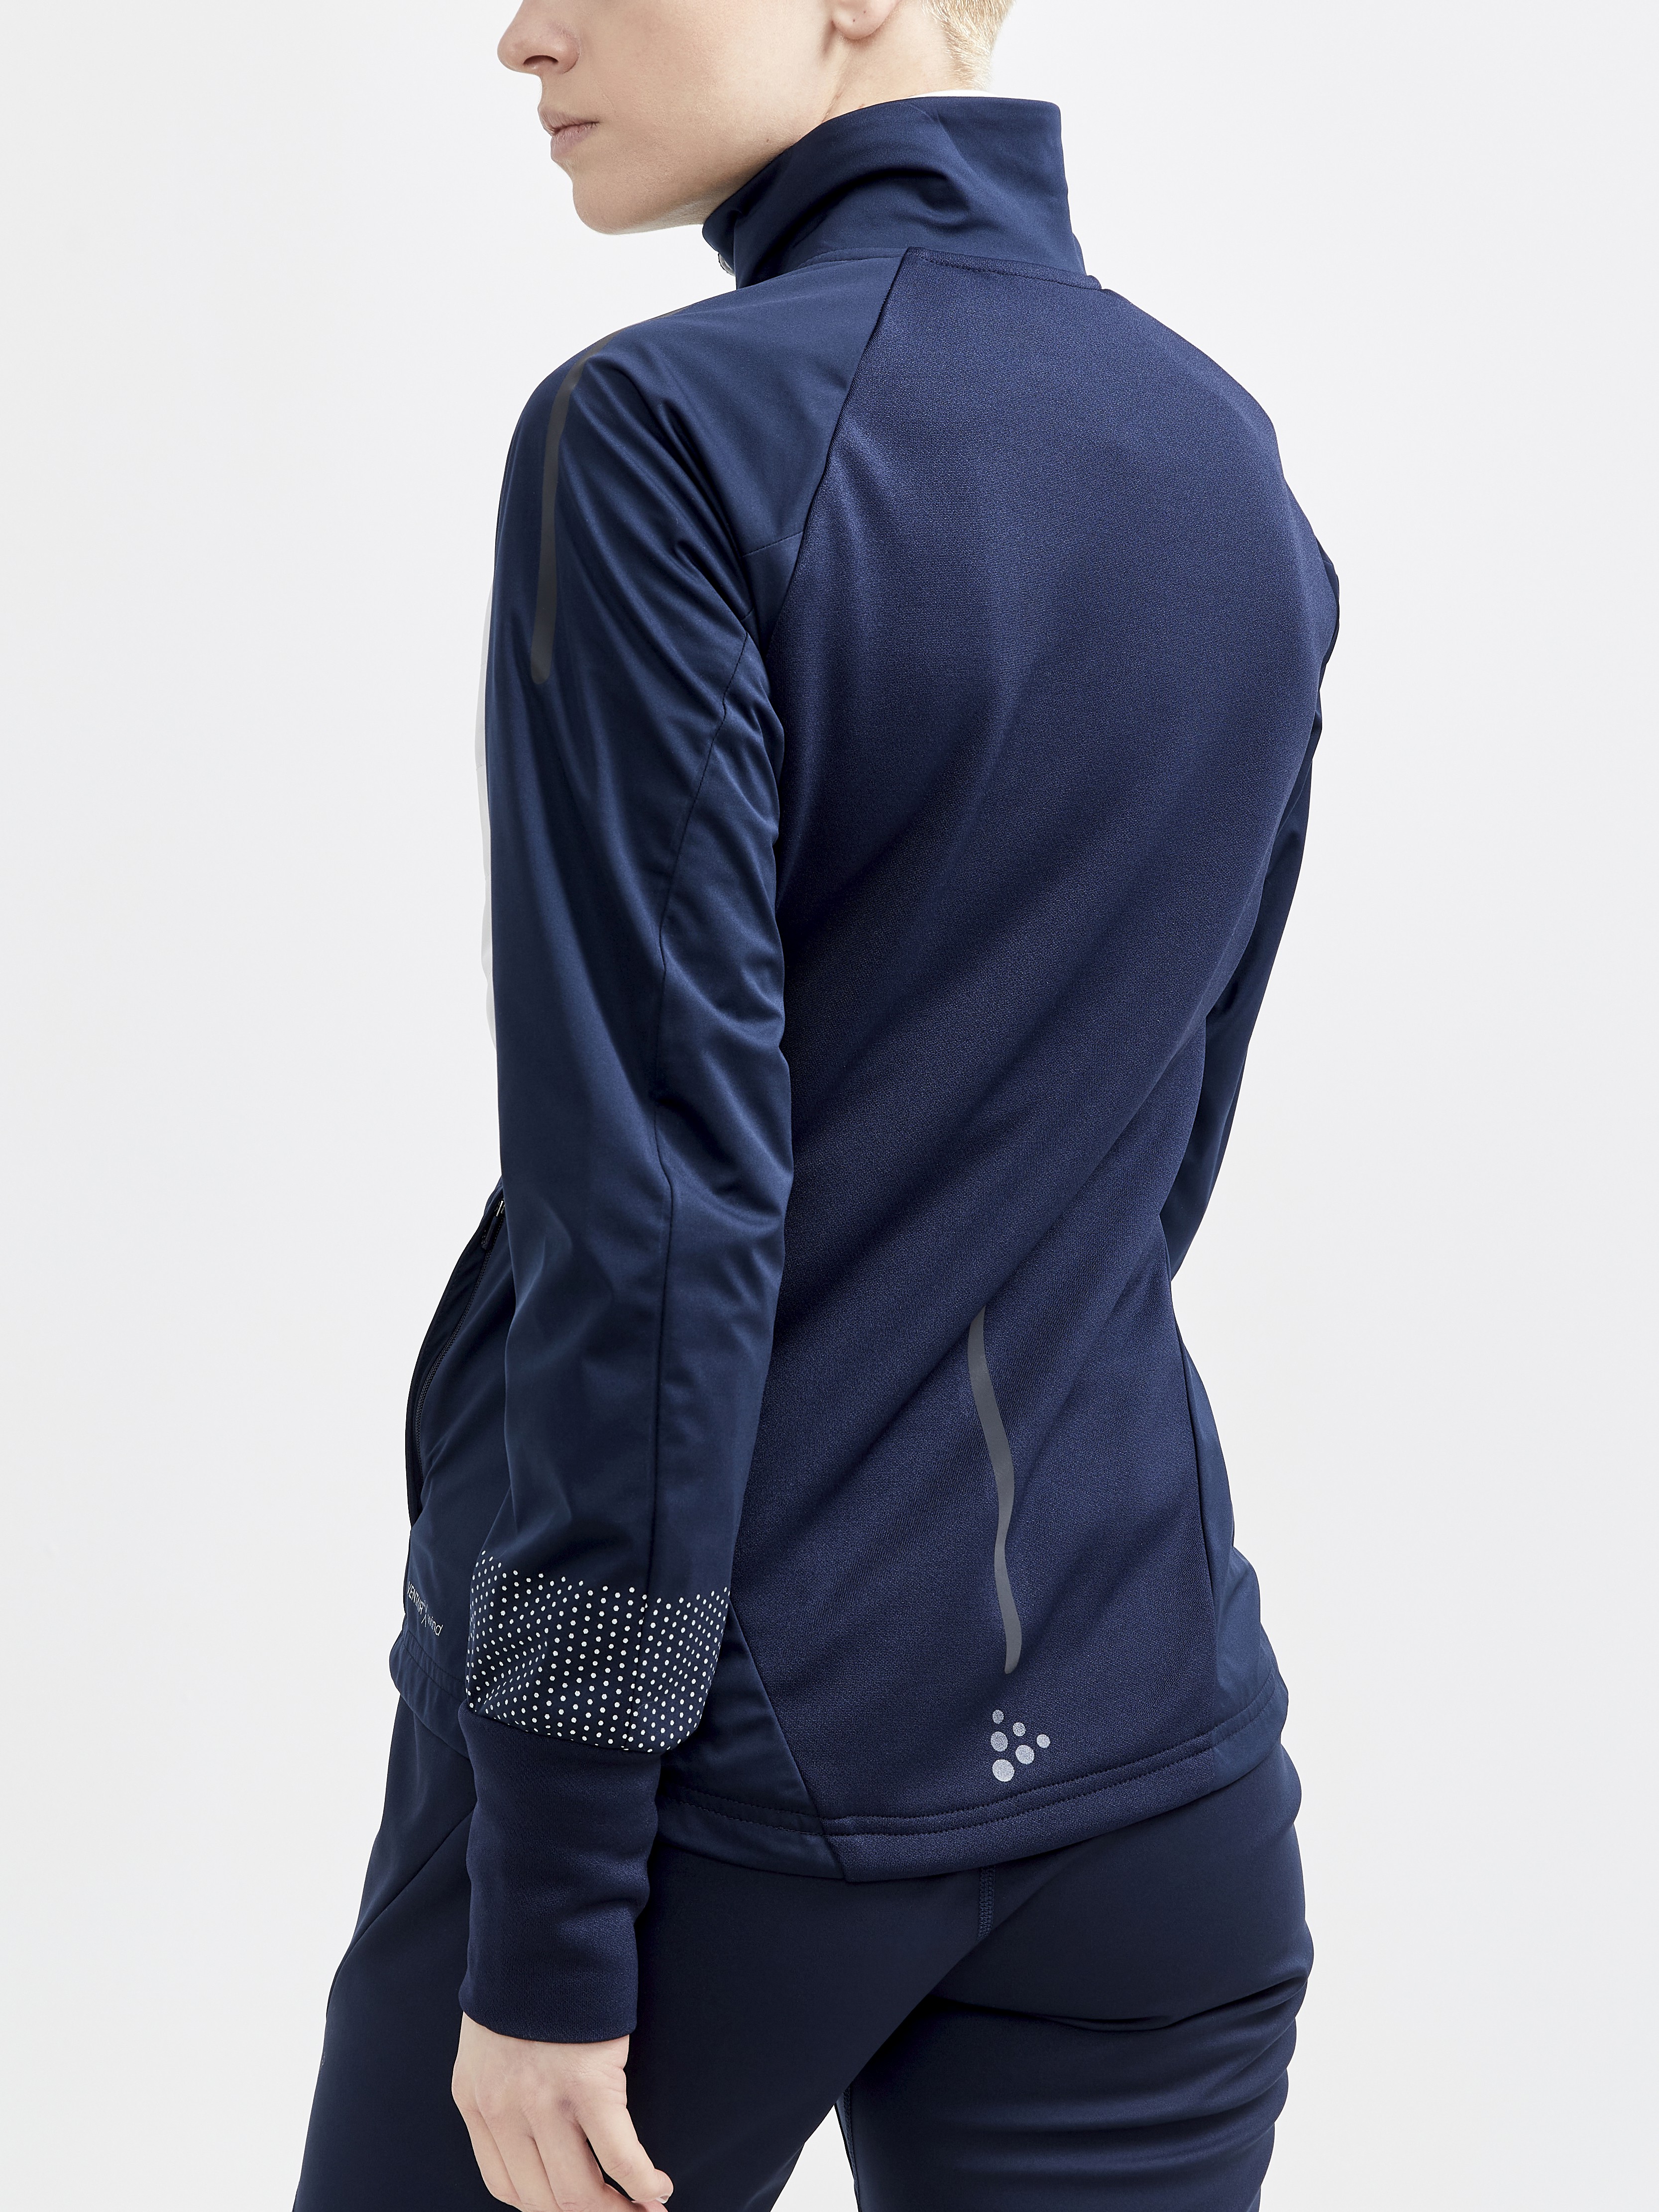 ADV Nordic Training Jacket W - Navy blue | Craft Sportswear